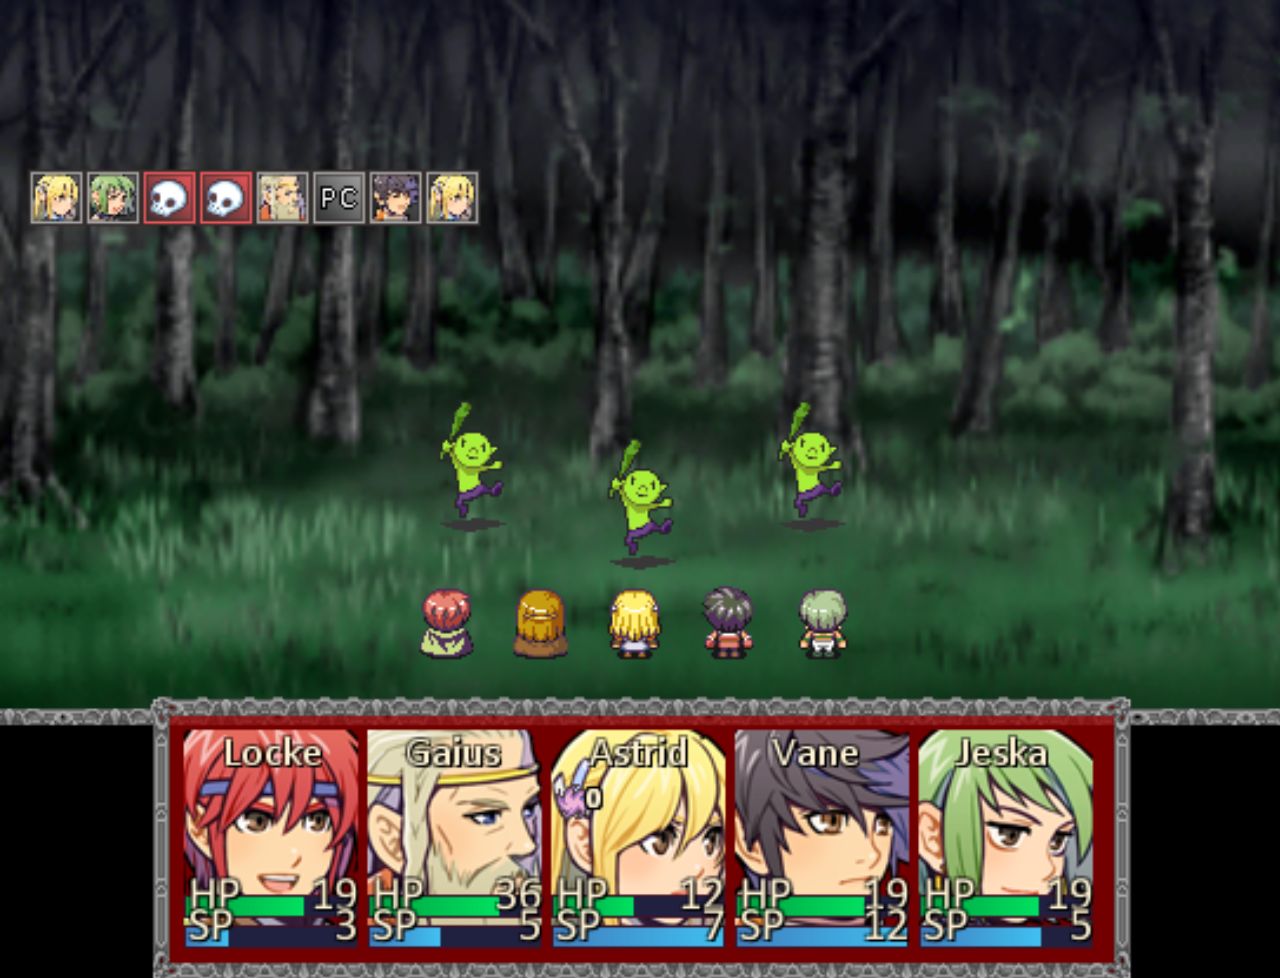 Heroes of Legionwood screenshot